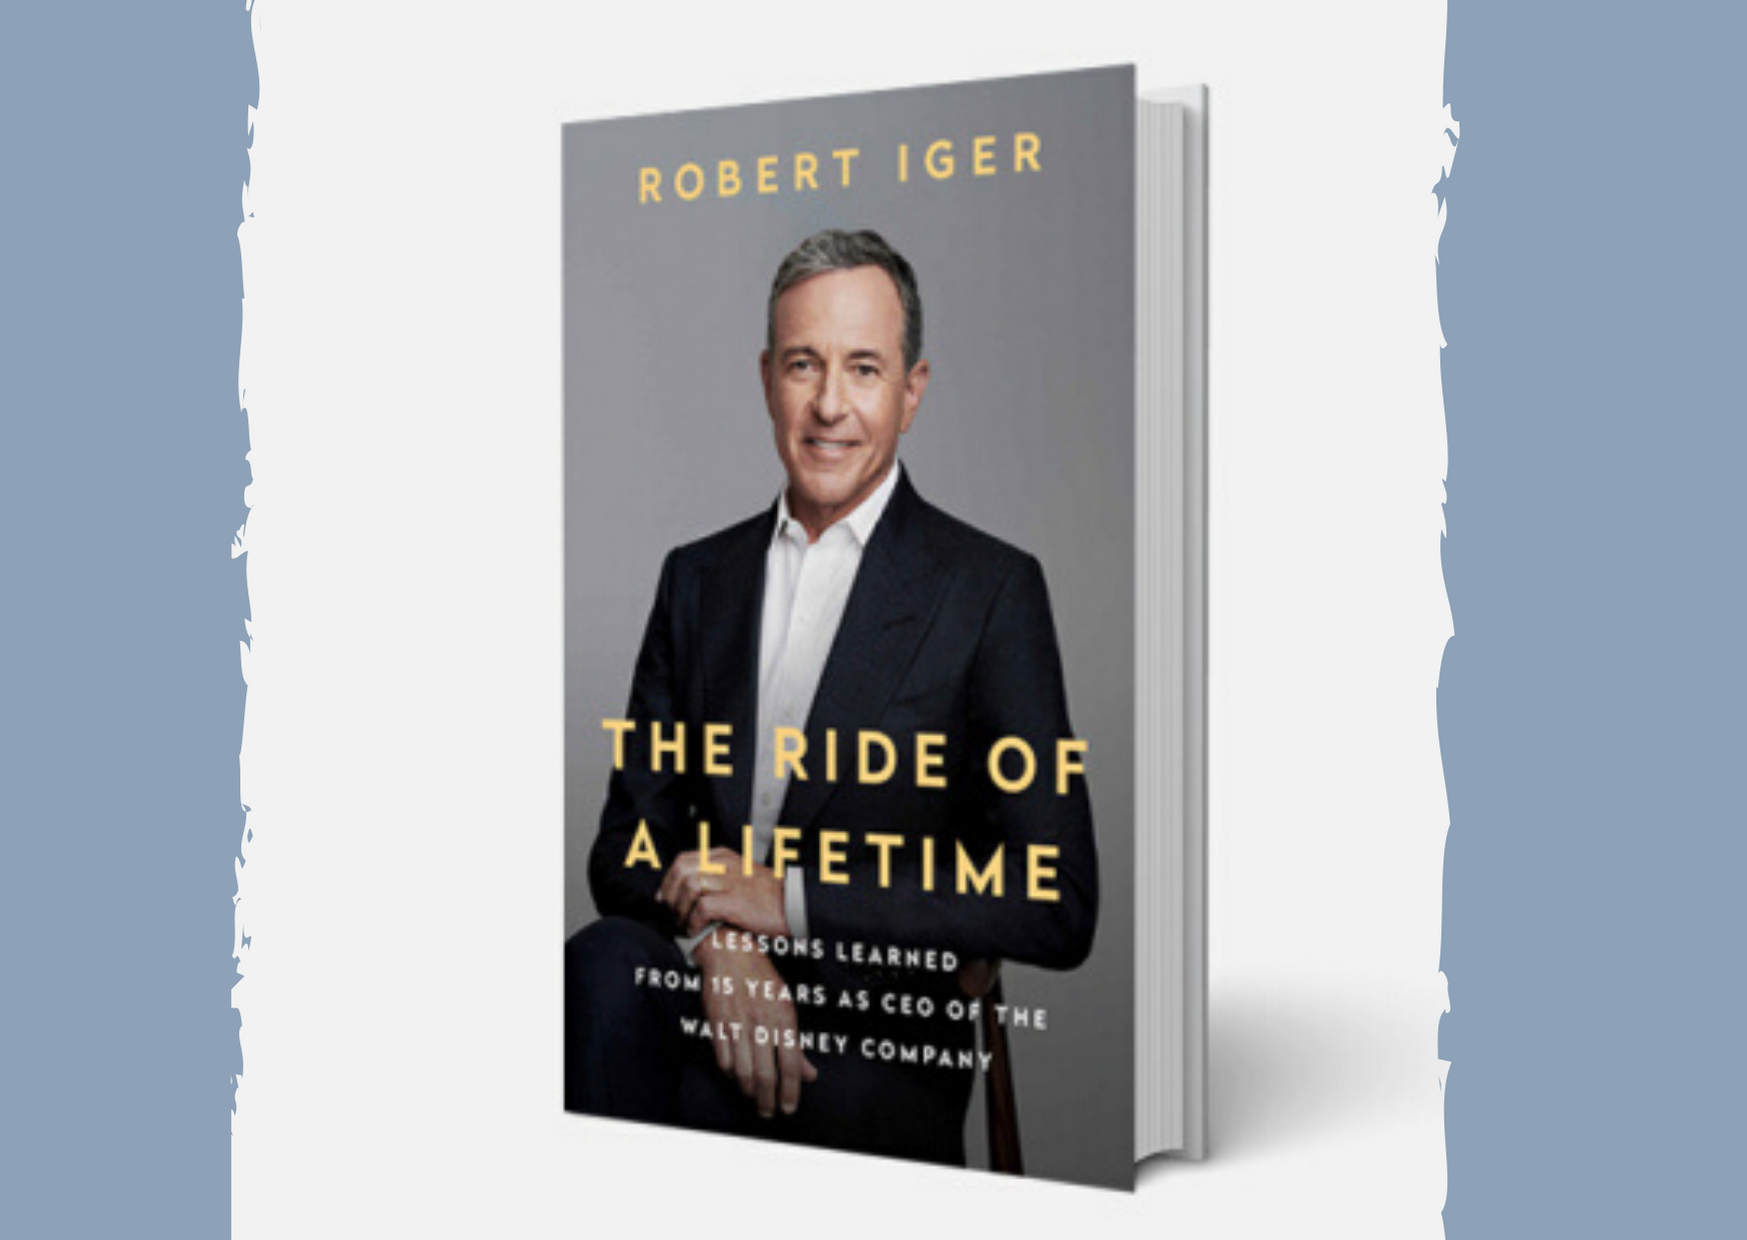 ride of a lifetime, Bob Iger, Robert Iger, Disney Book, Leadership principles